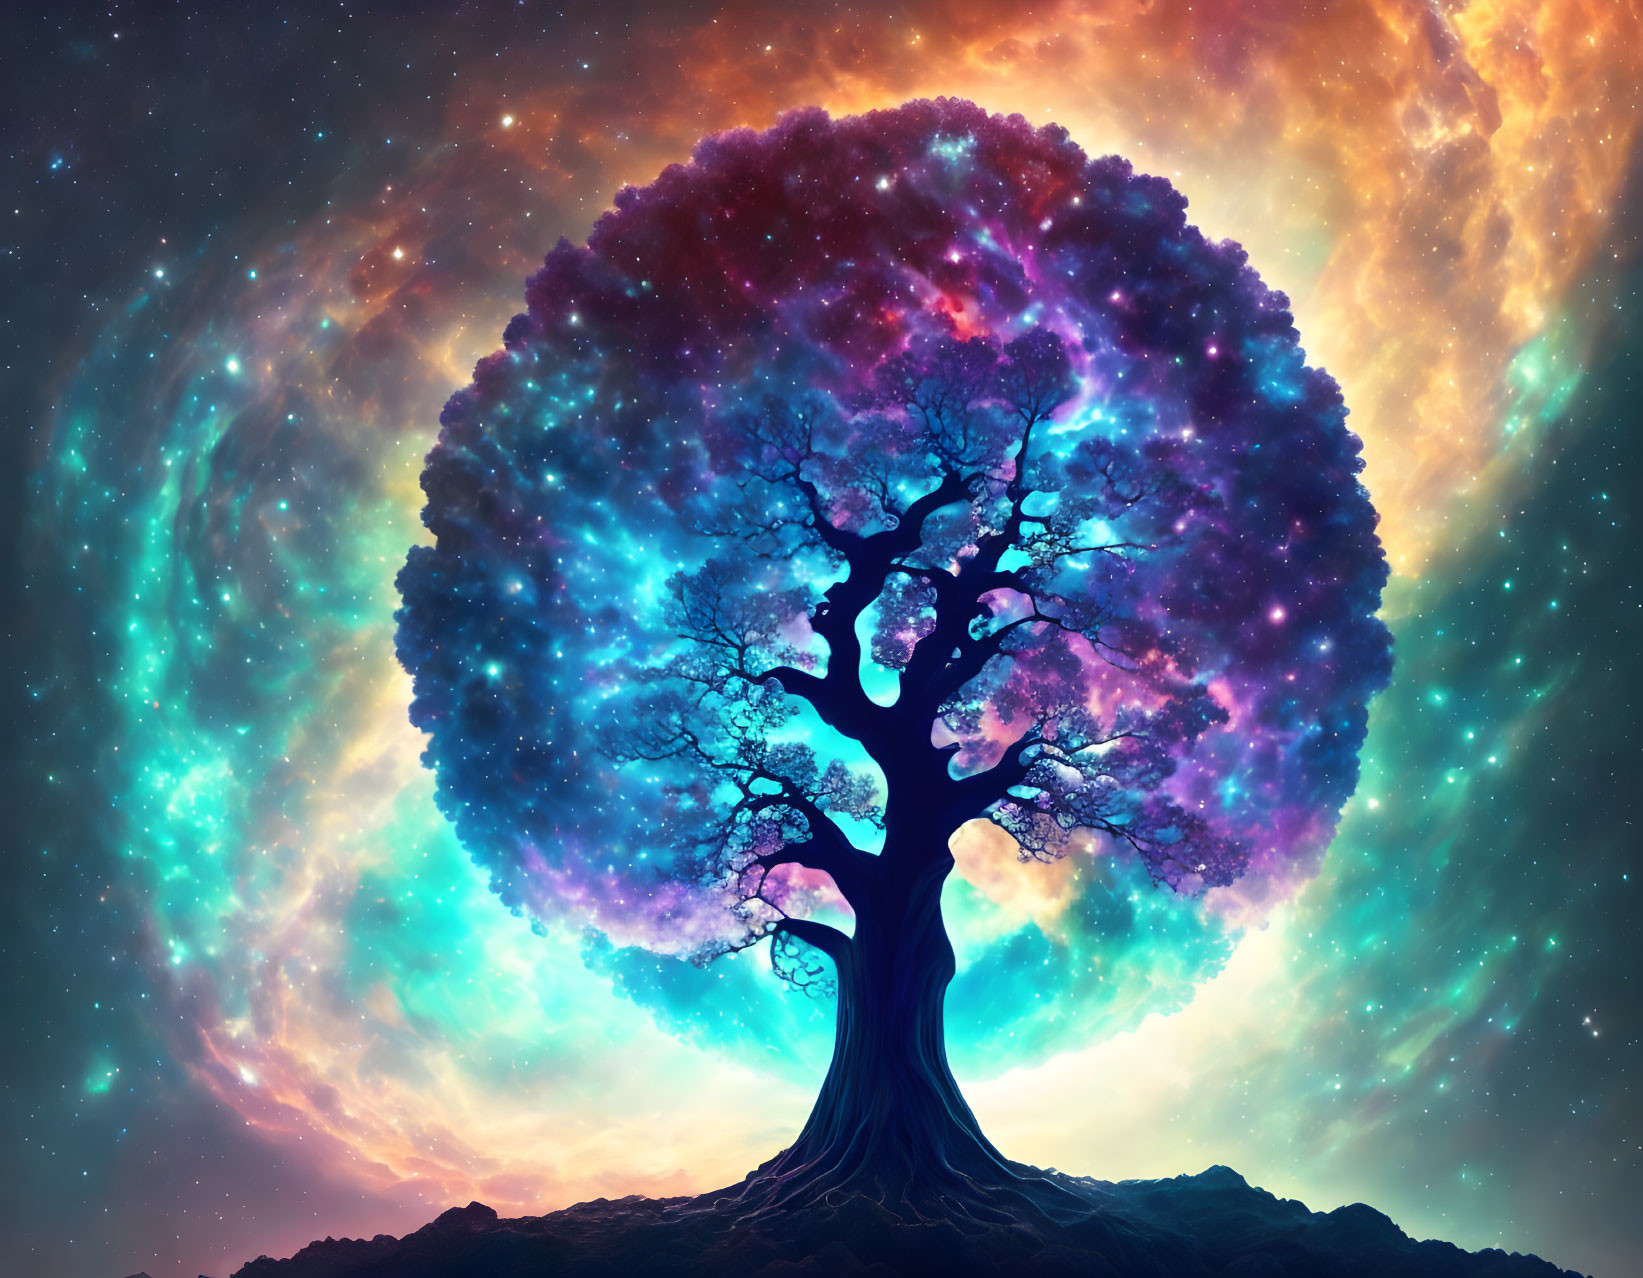 Colorful Tree Illustration with Cosmic Foliage and Nebula Sky